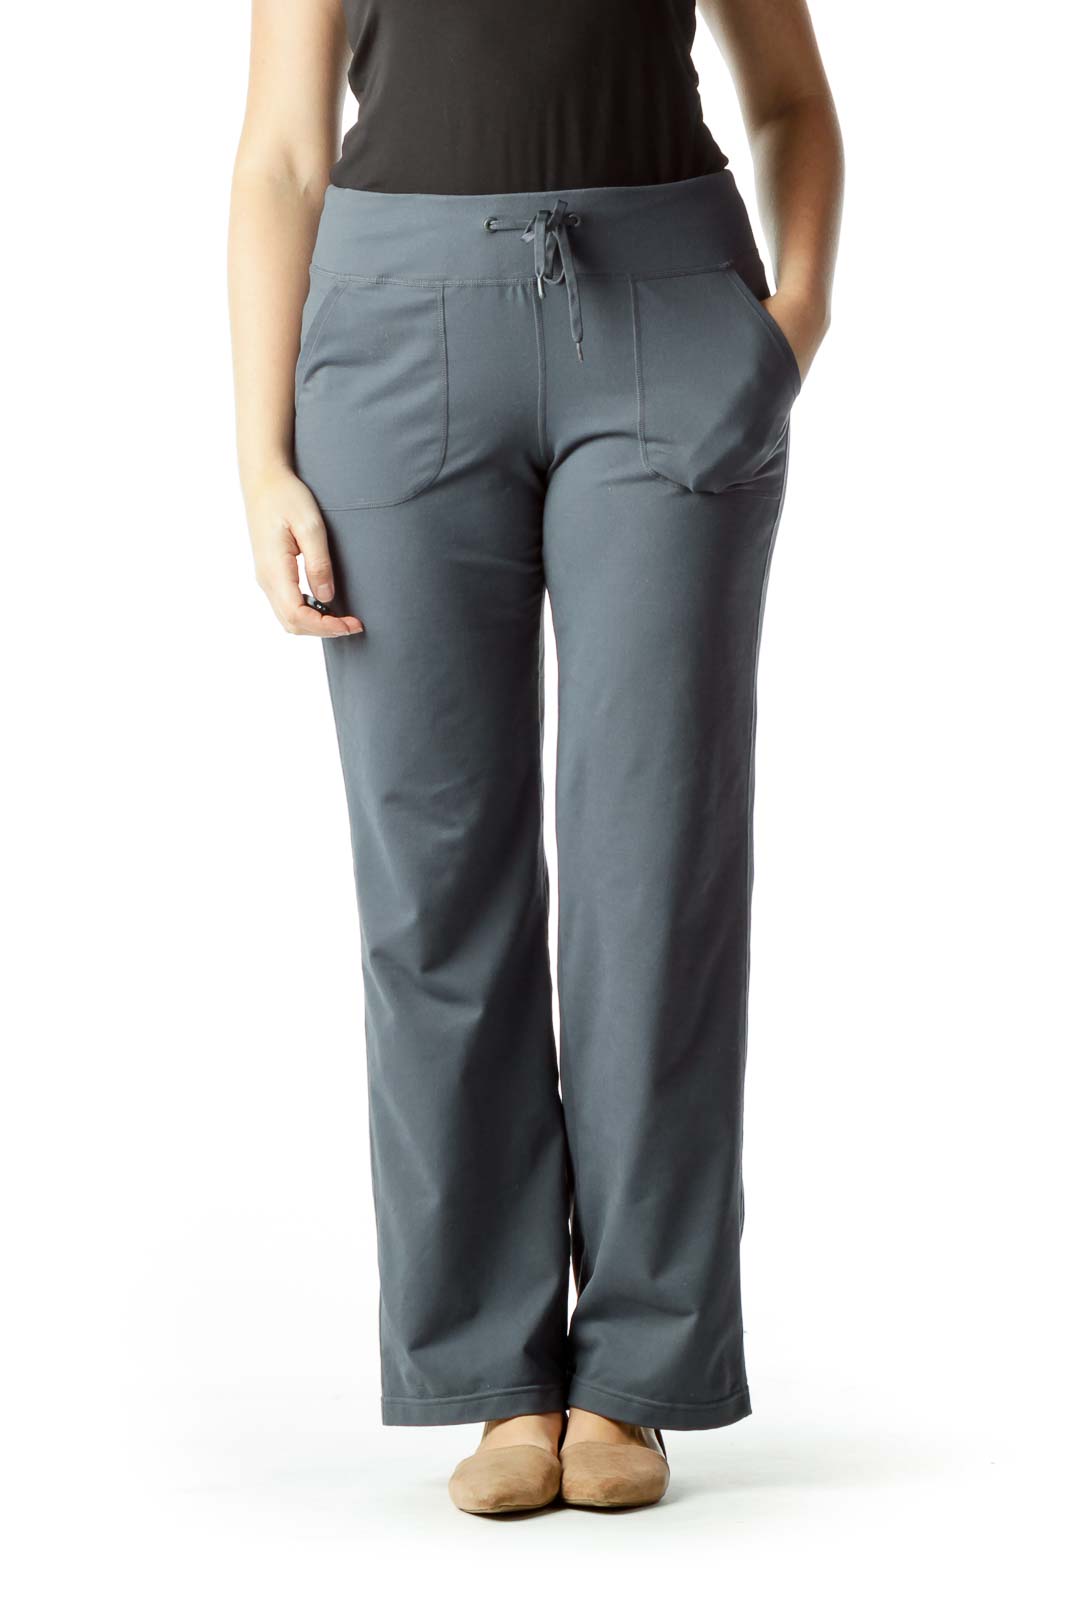 Gray Pocketed Yoga Pants Front